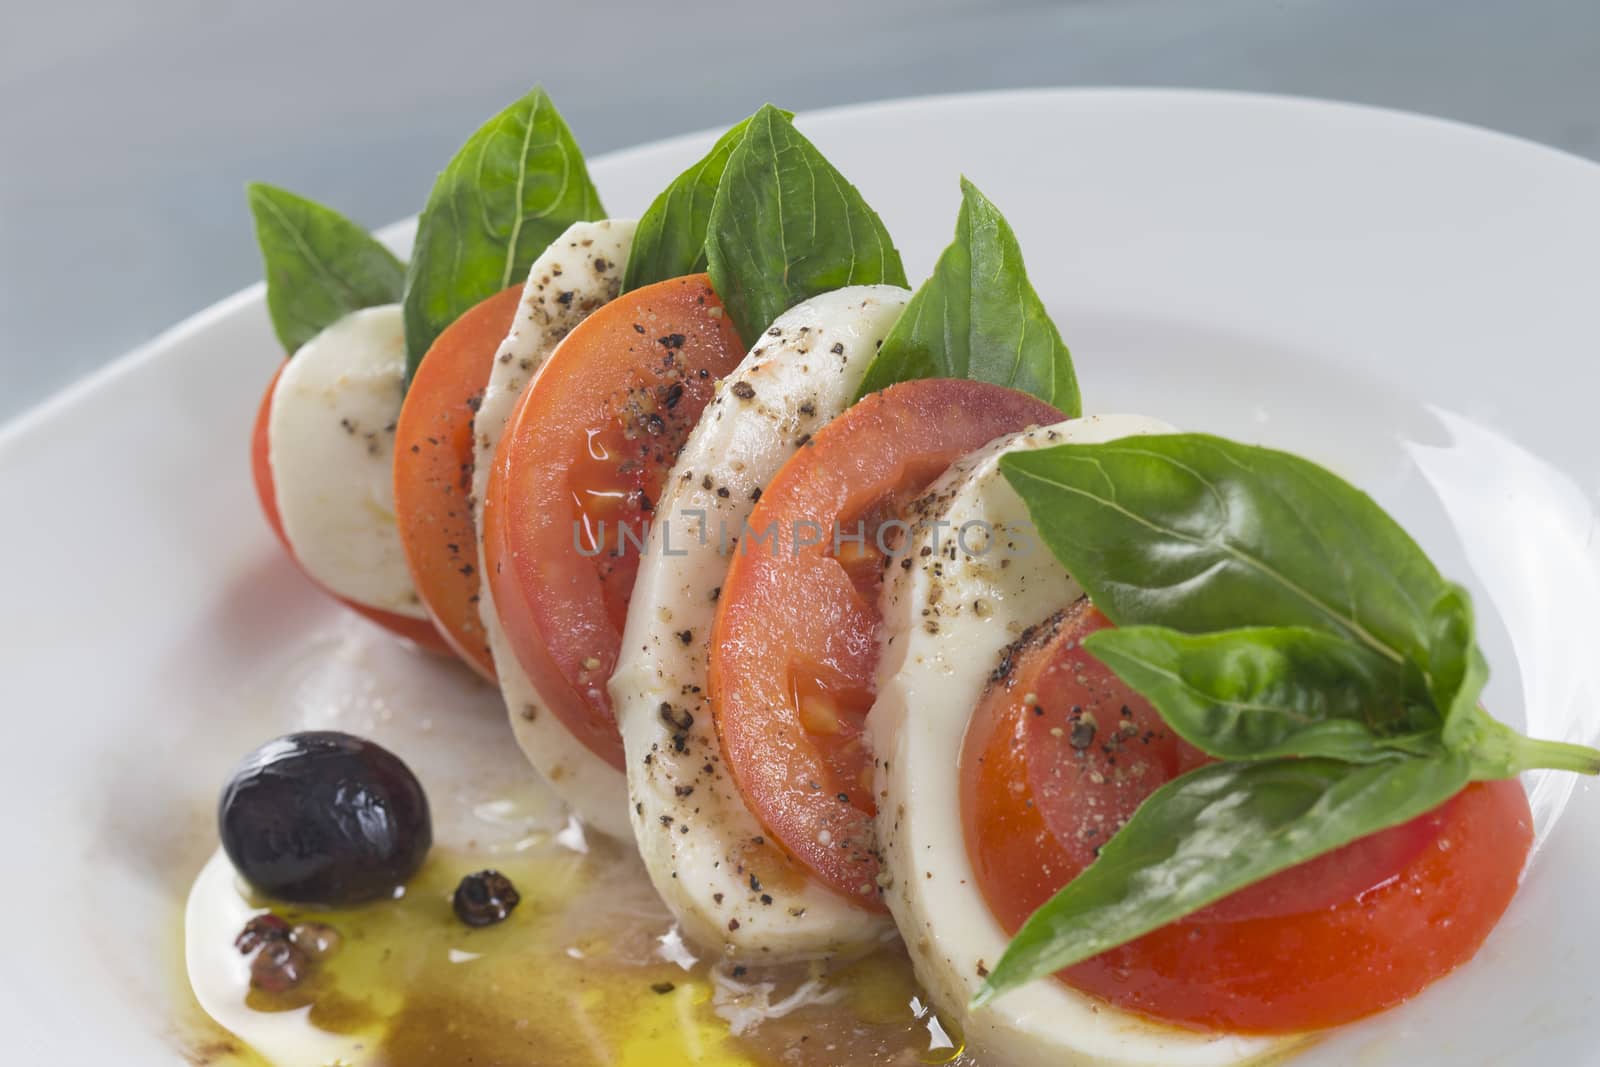 Tomato Mozzarella salad by JPC-PROD